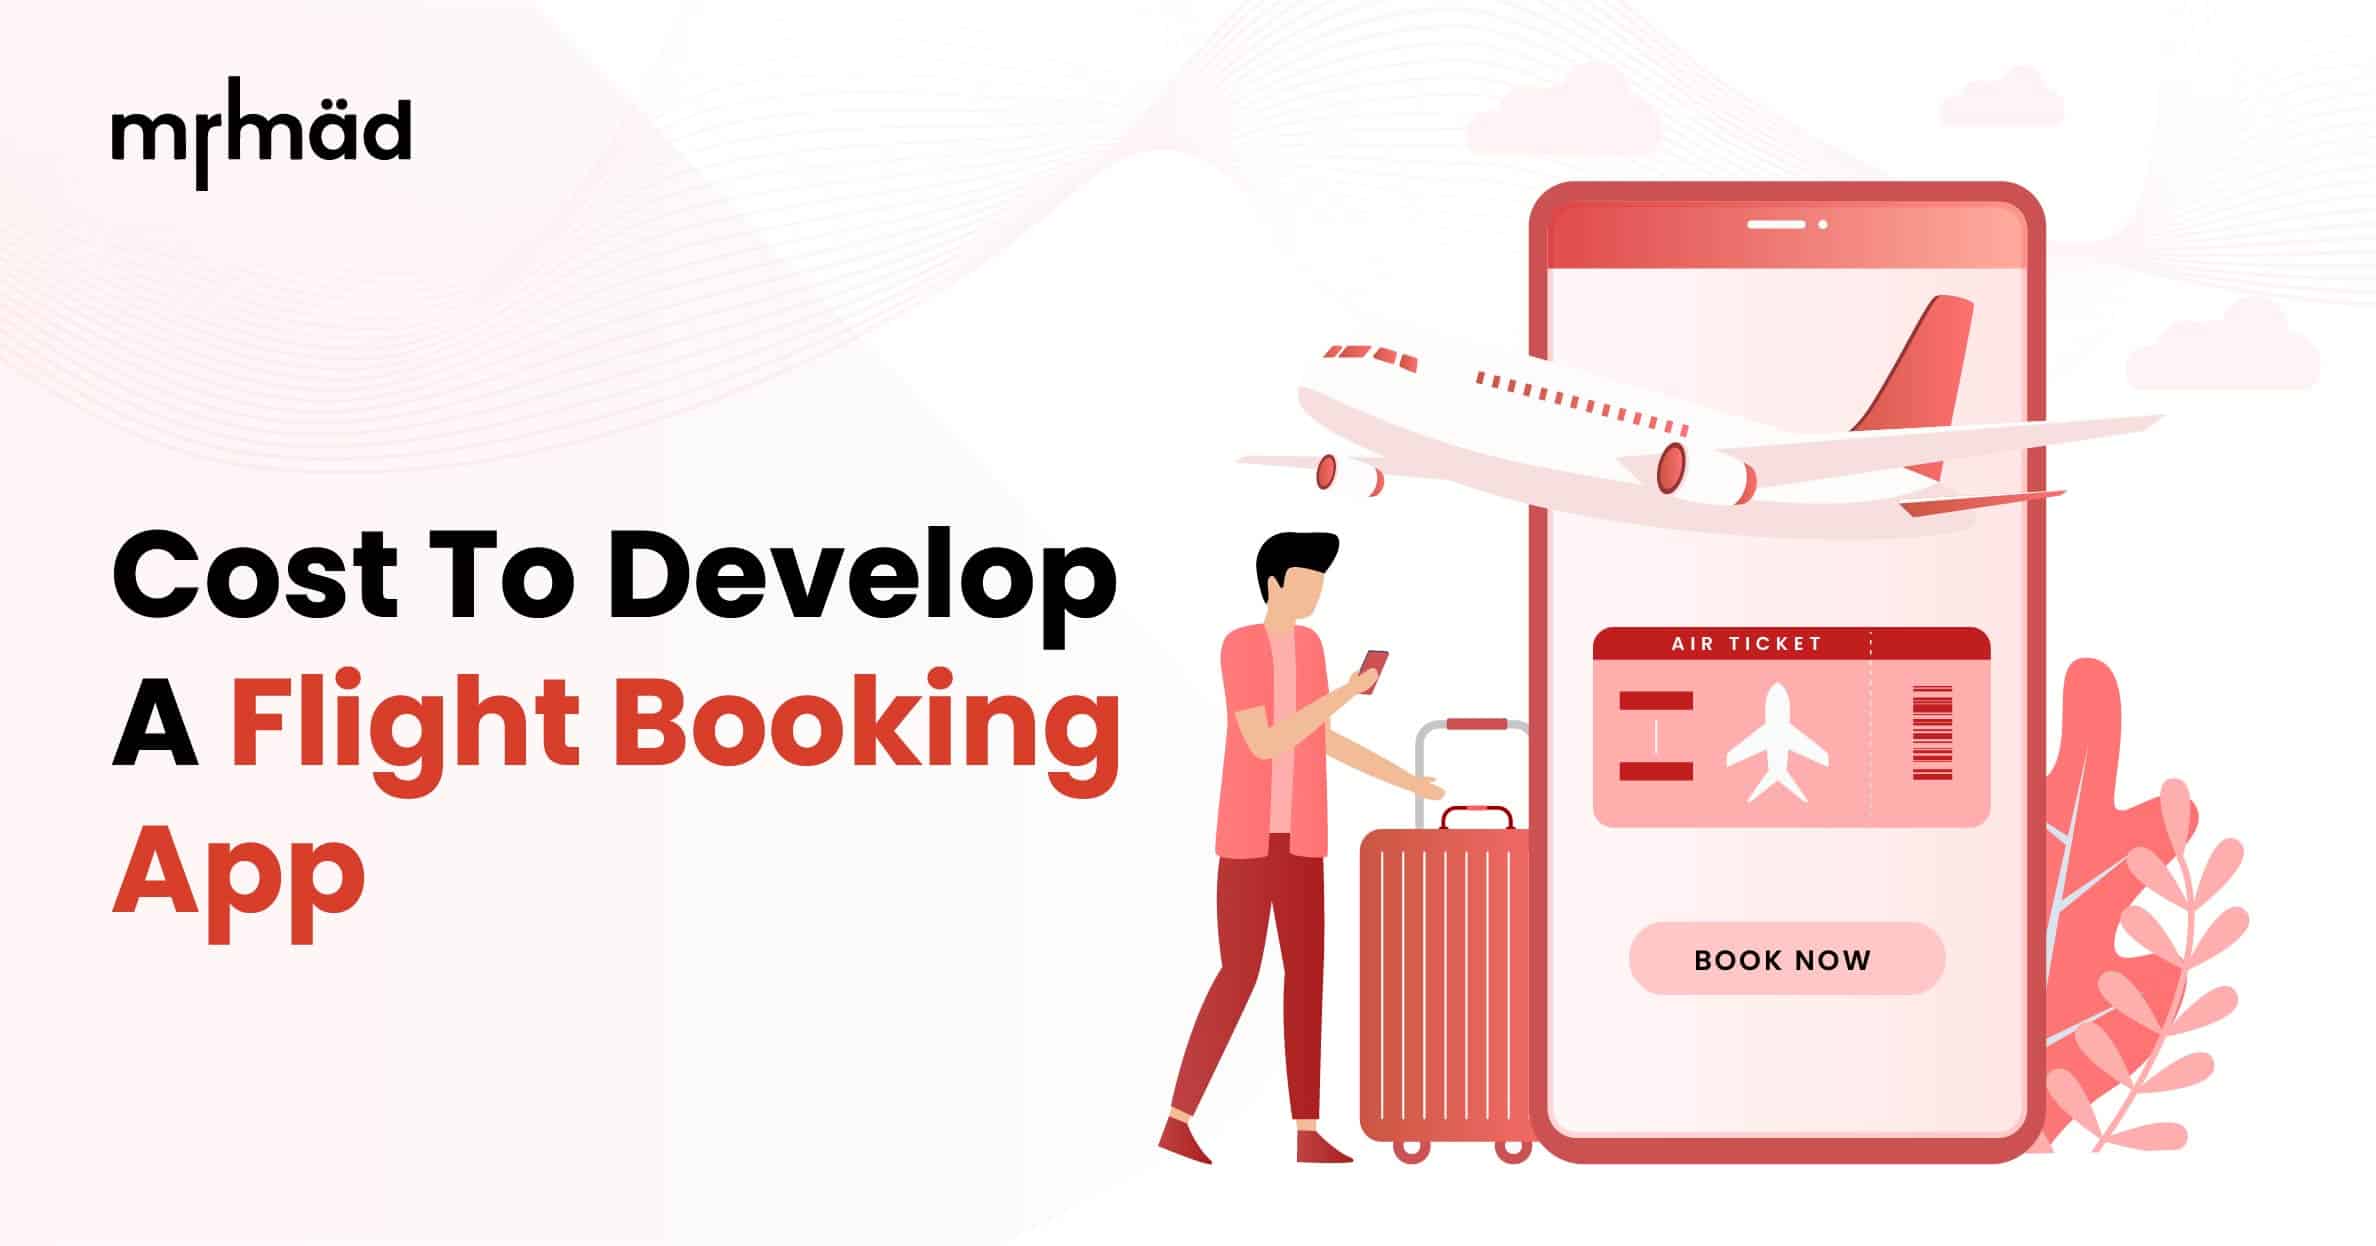 flight booking app development